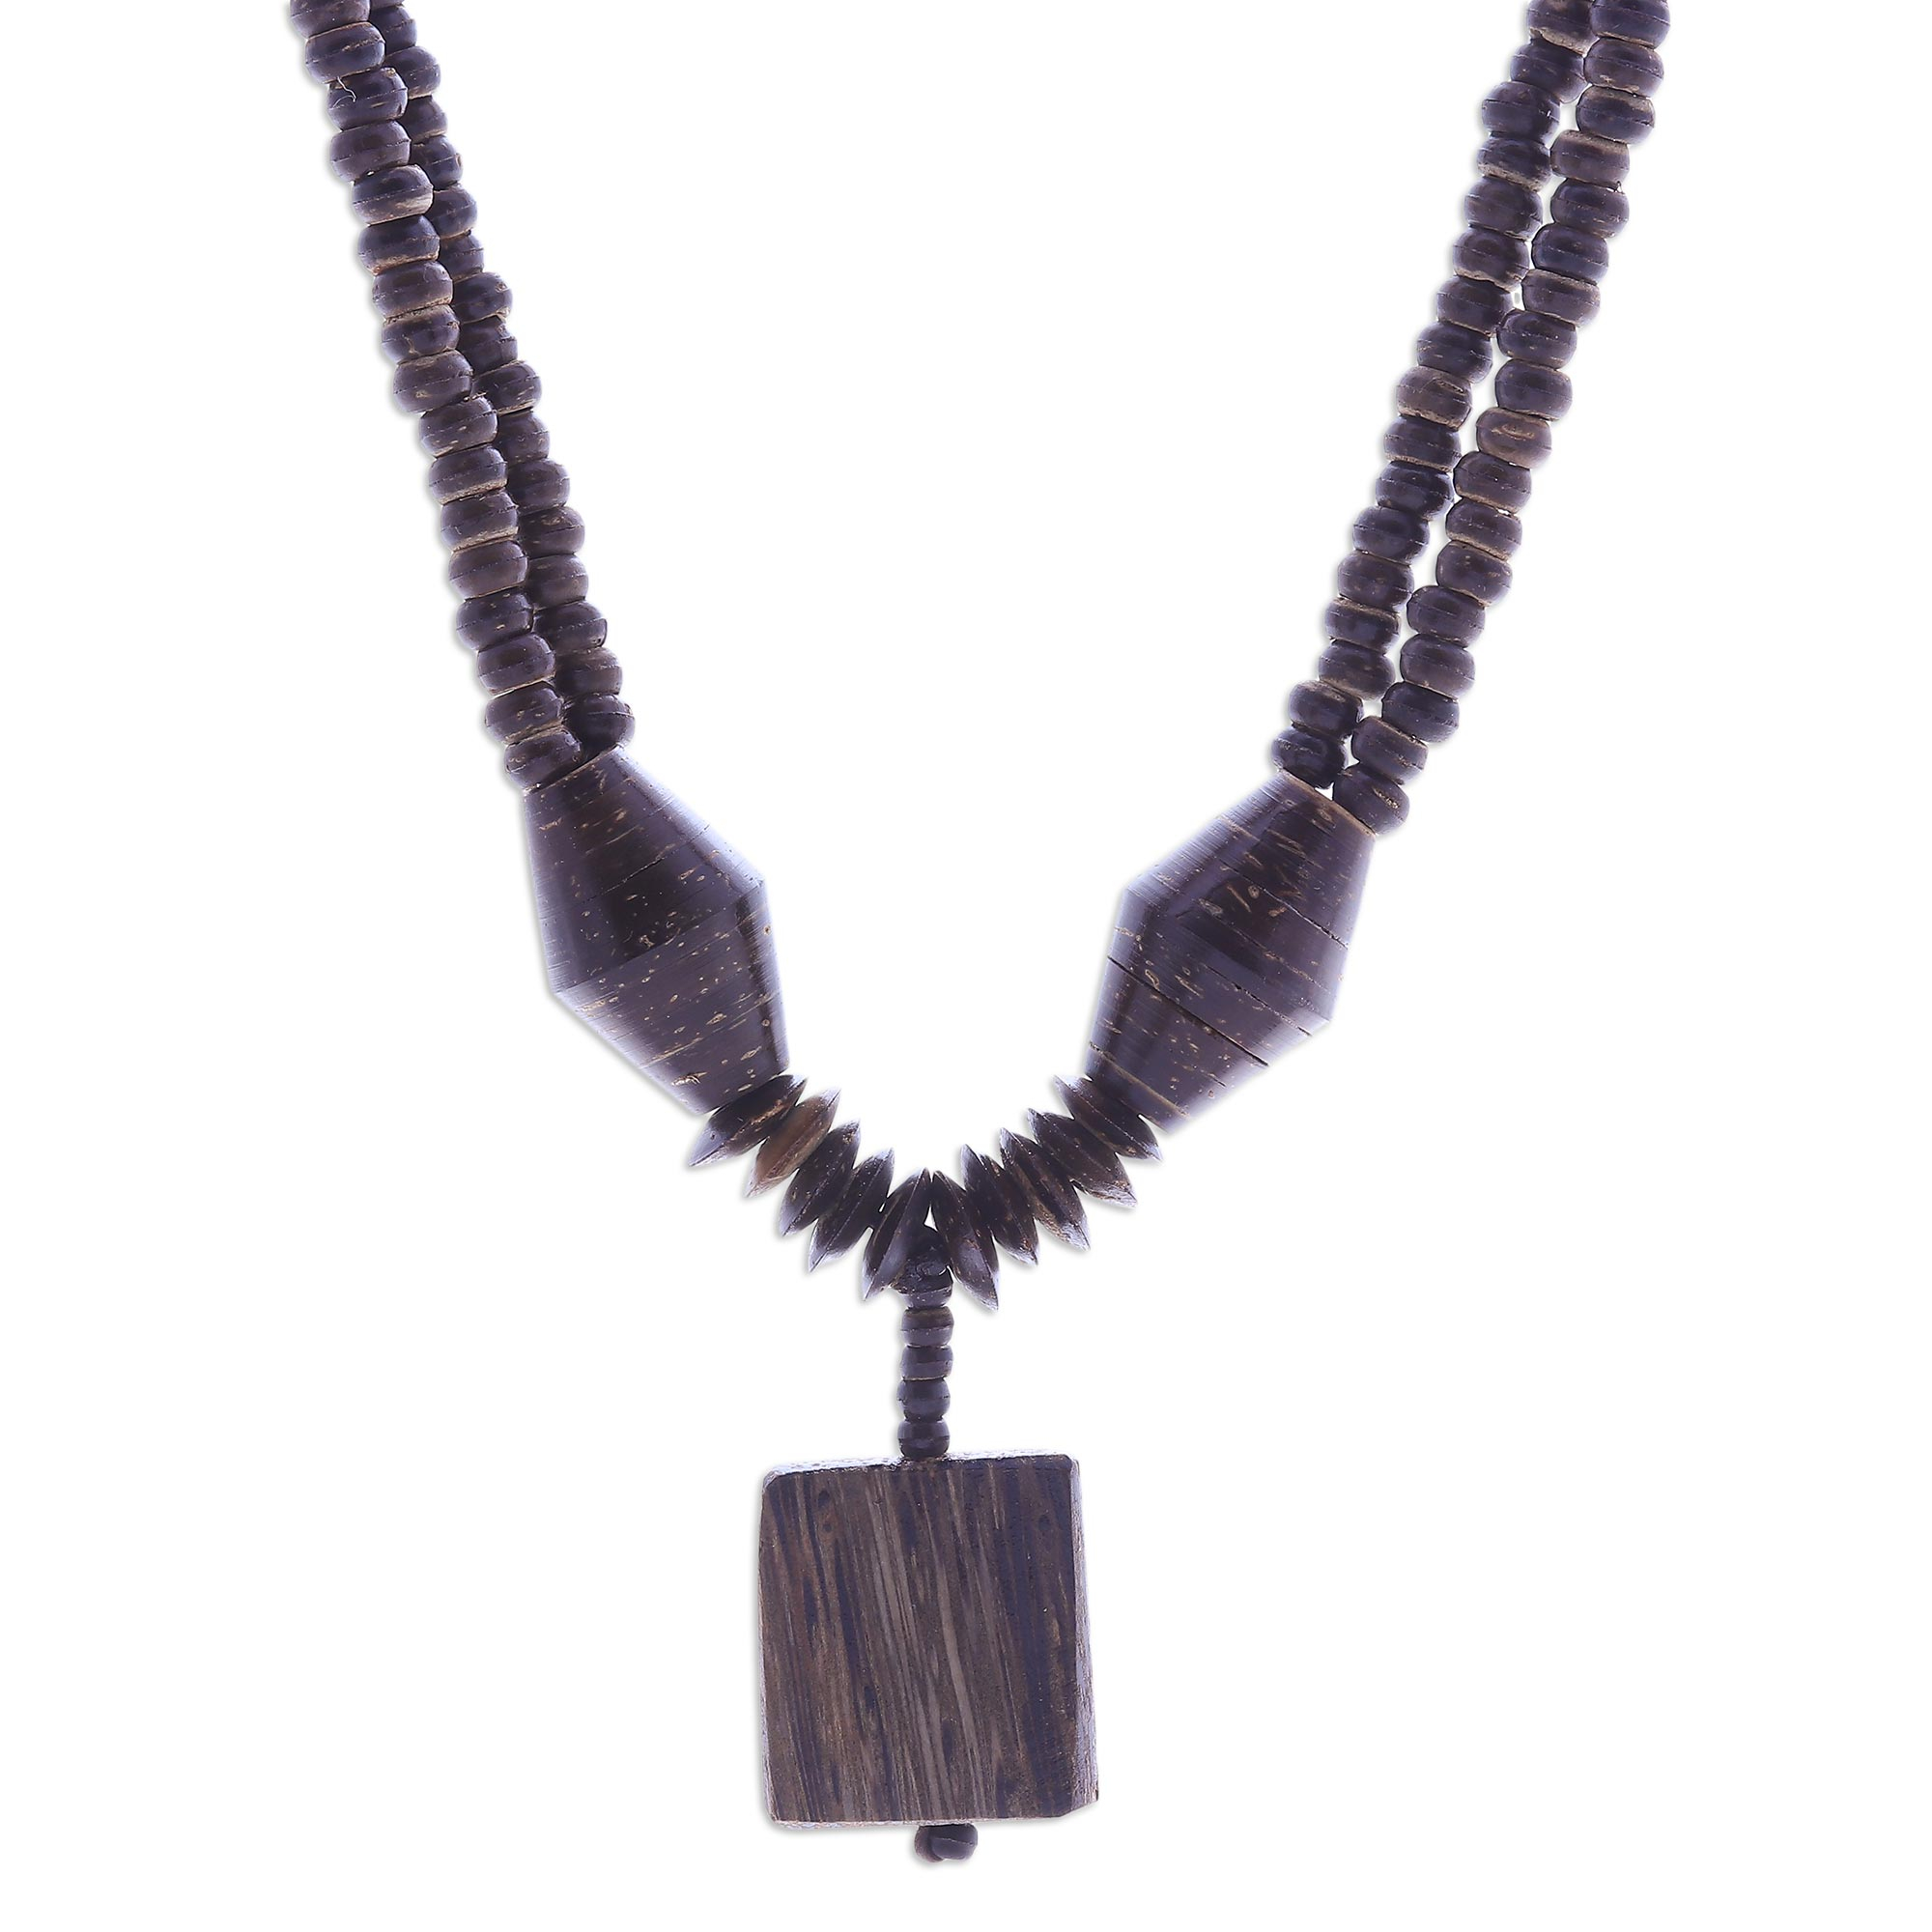 handmade. Necklace shell wooden pendant